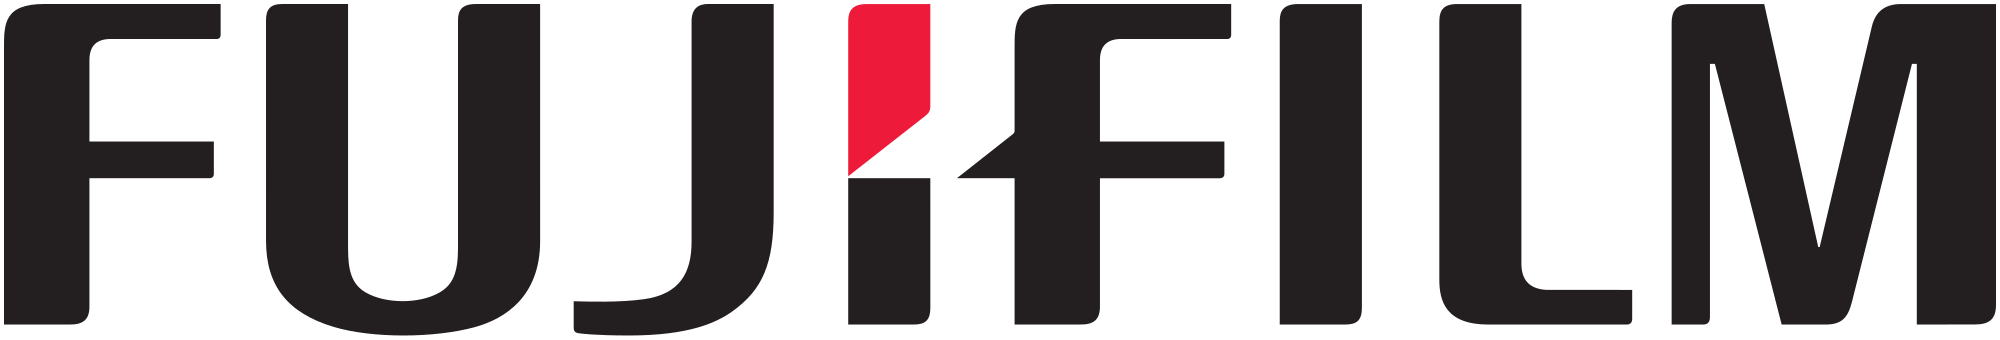 Fuji Logo - File:Fujifilm logo.svg - Wikimedia Commons